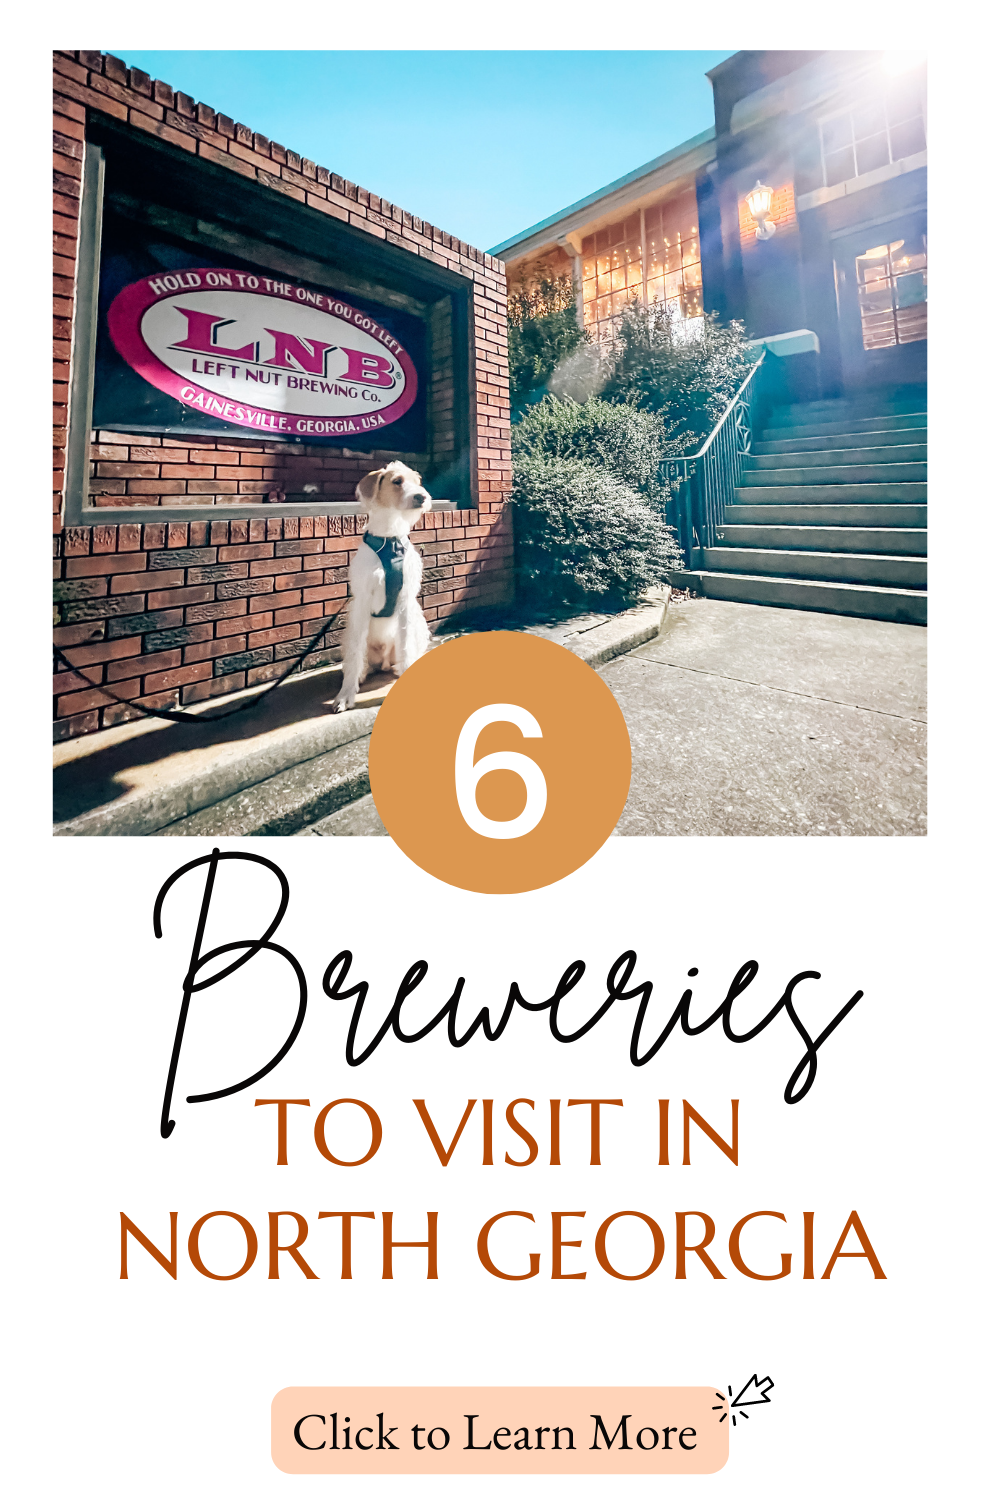 Breweries to Visit in North Georgia